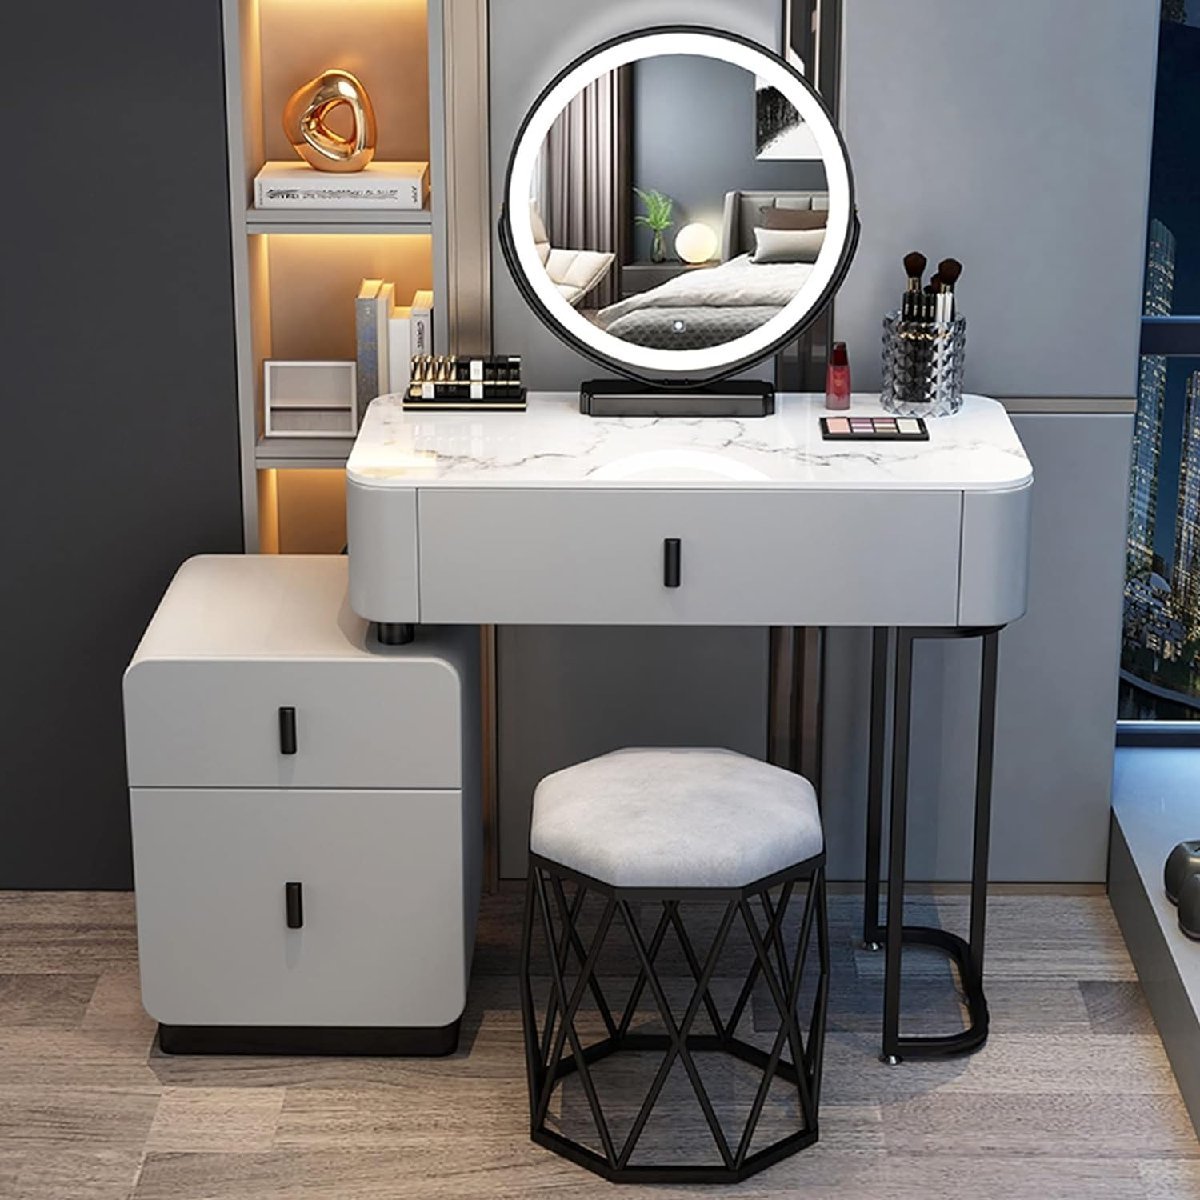  light attaching mirror attaching dresser dresser stool attaching white / gray dressing table set drawer attaching dresser 100cm